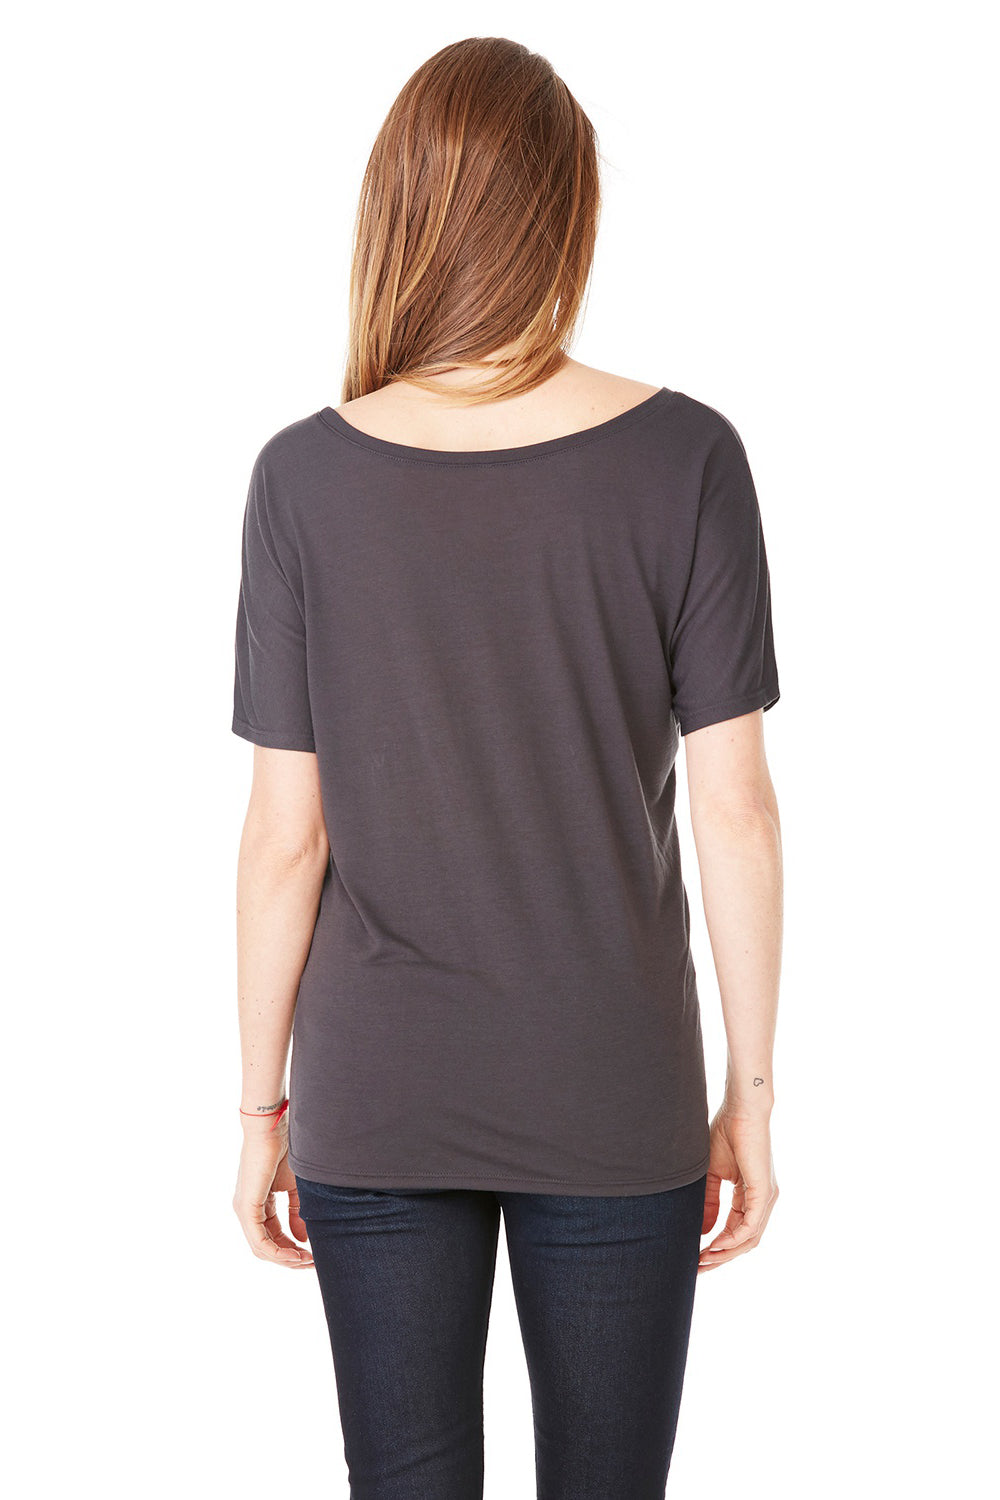 Bella + Canvas 8816 Womens Slouchy Short Sleeve Wide Neck T-Shirt Dark Grey Back